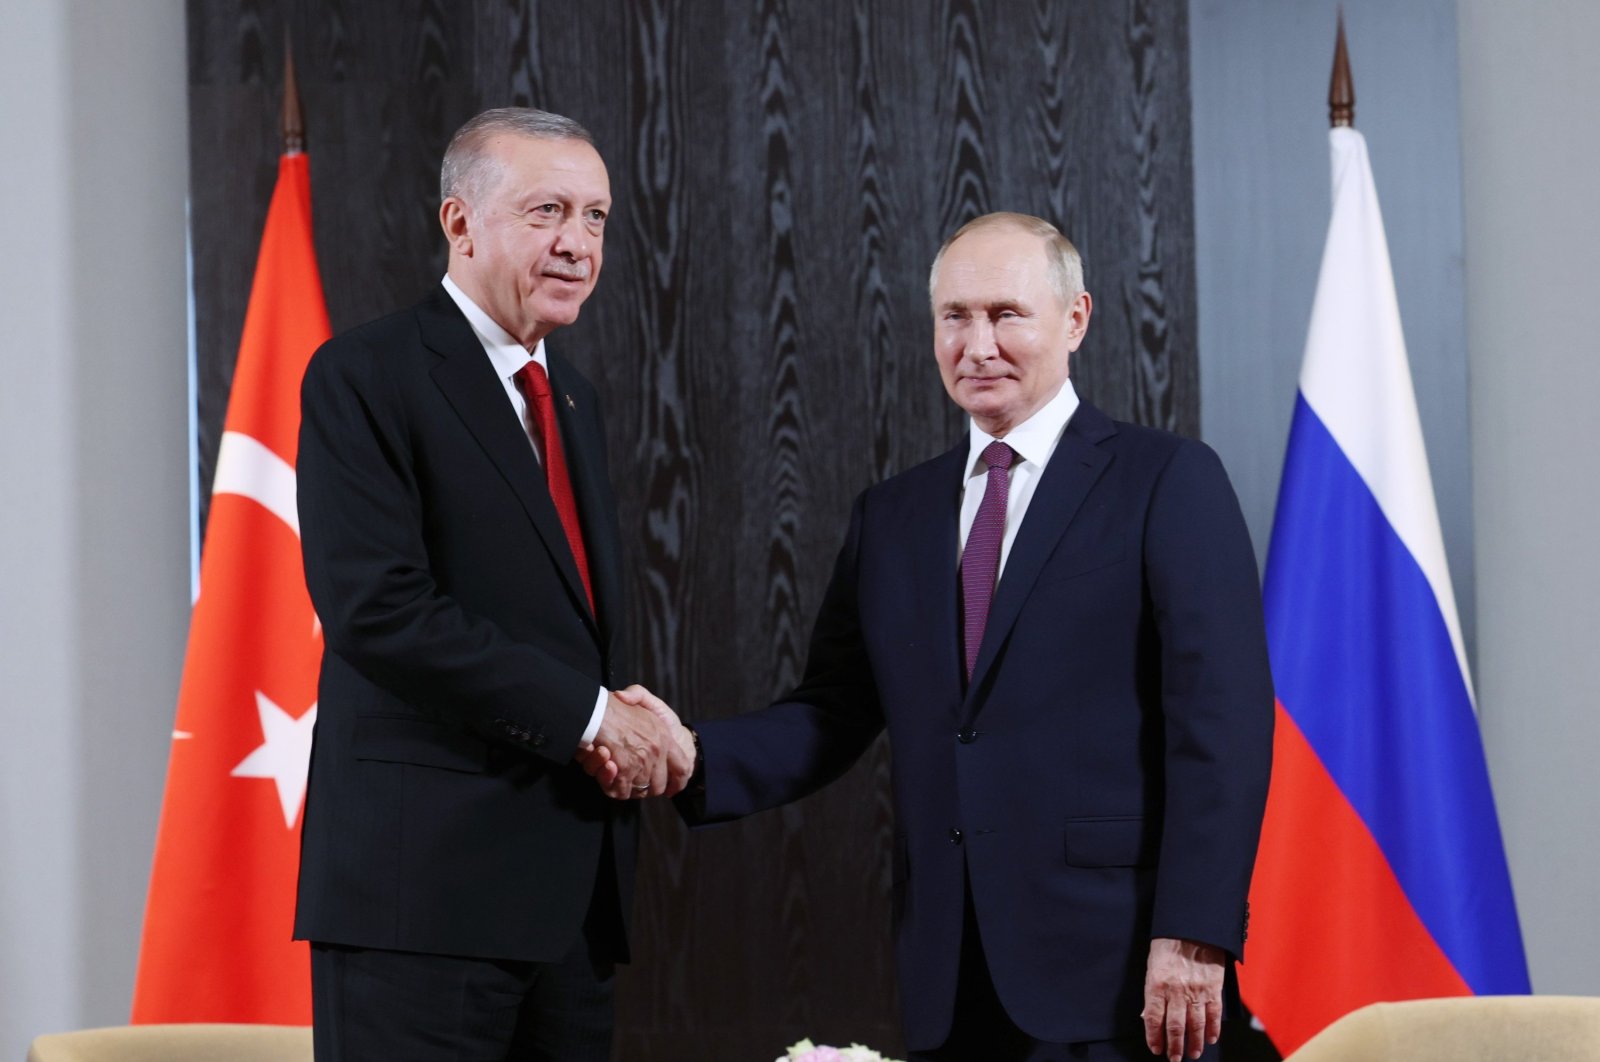 President Recep Tayyip Erdoğan shakes hands with Russian President Vladimir Putin during a meeting in Samarkand, Uzbekistan, Sept. 18, 2022. (IHA Photo)